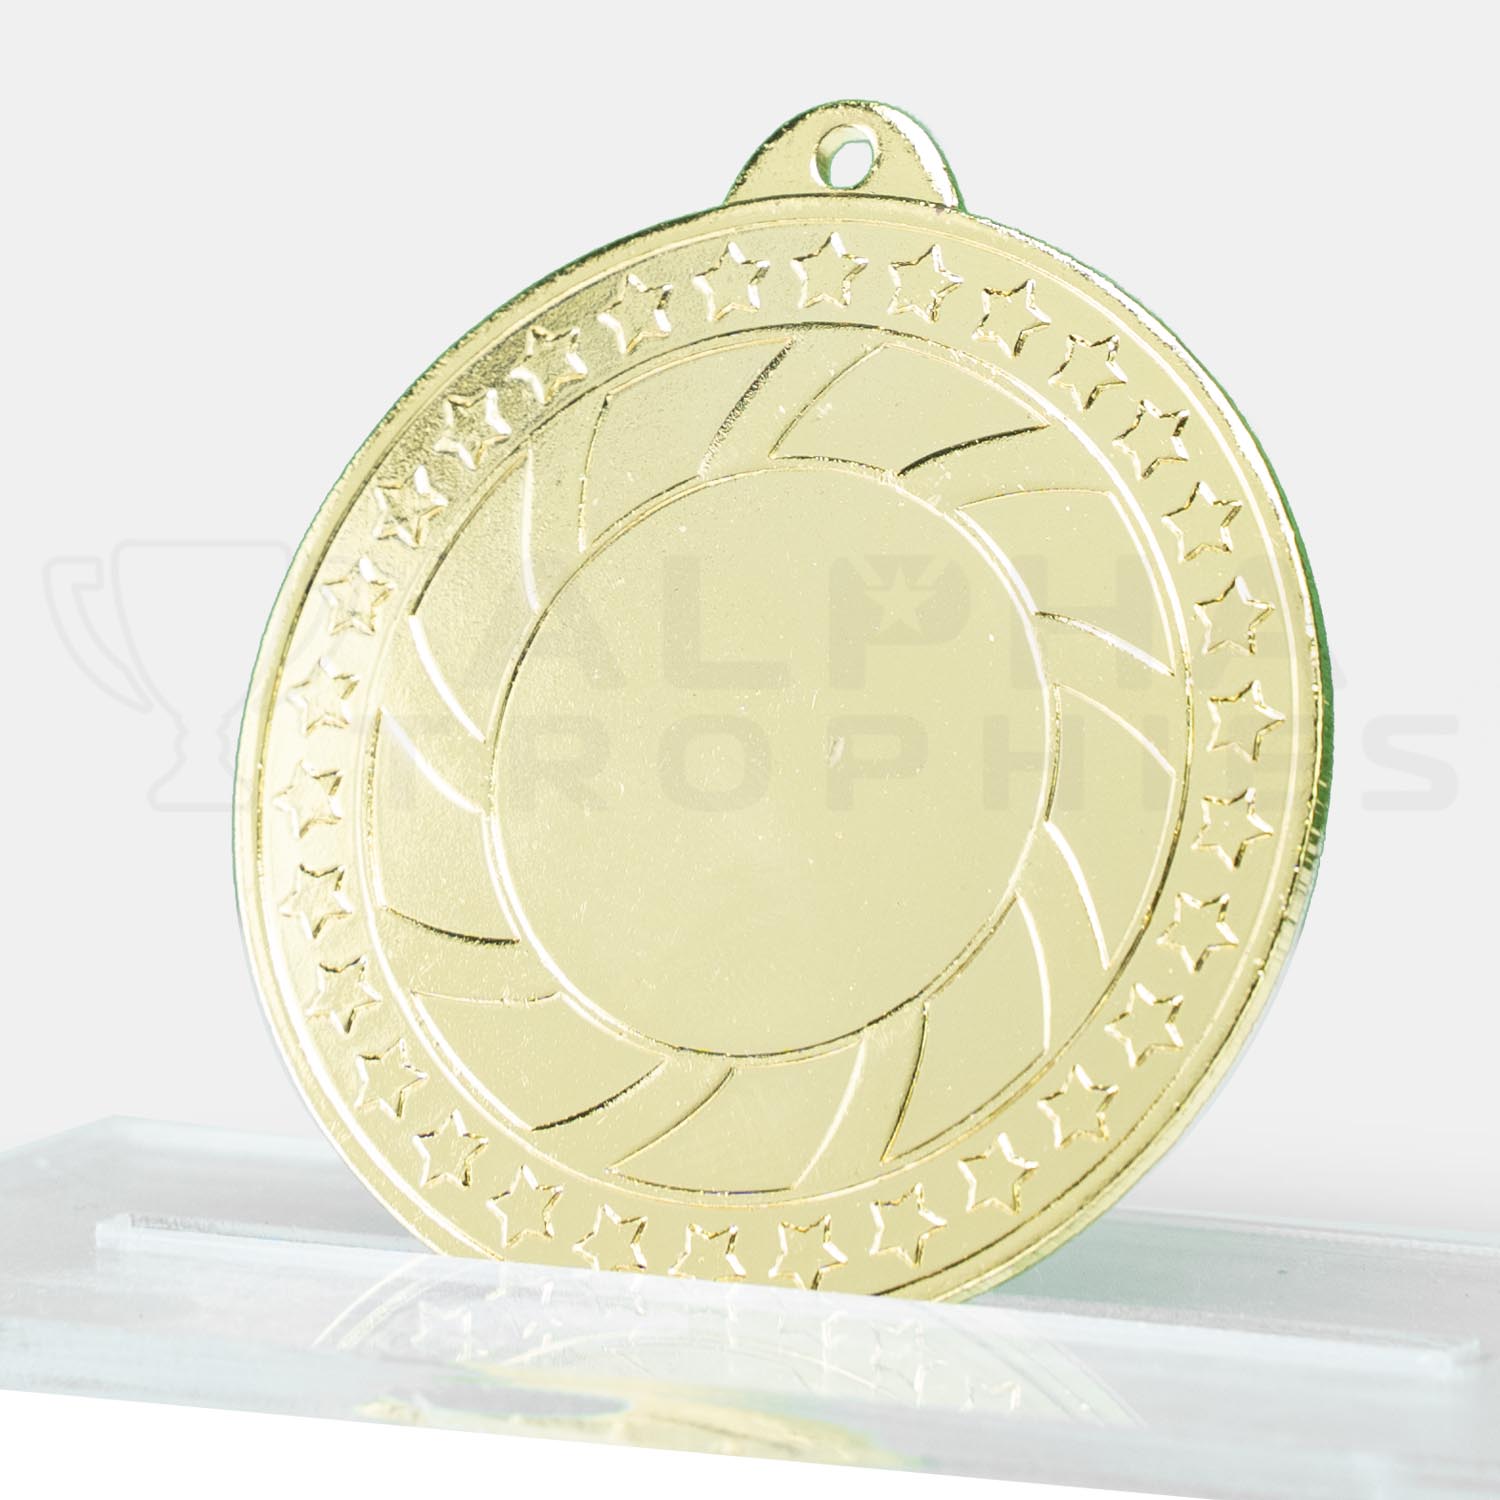 generic-25mm-centre-wreath-medal-gold-1046gvp-side